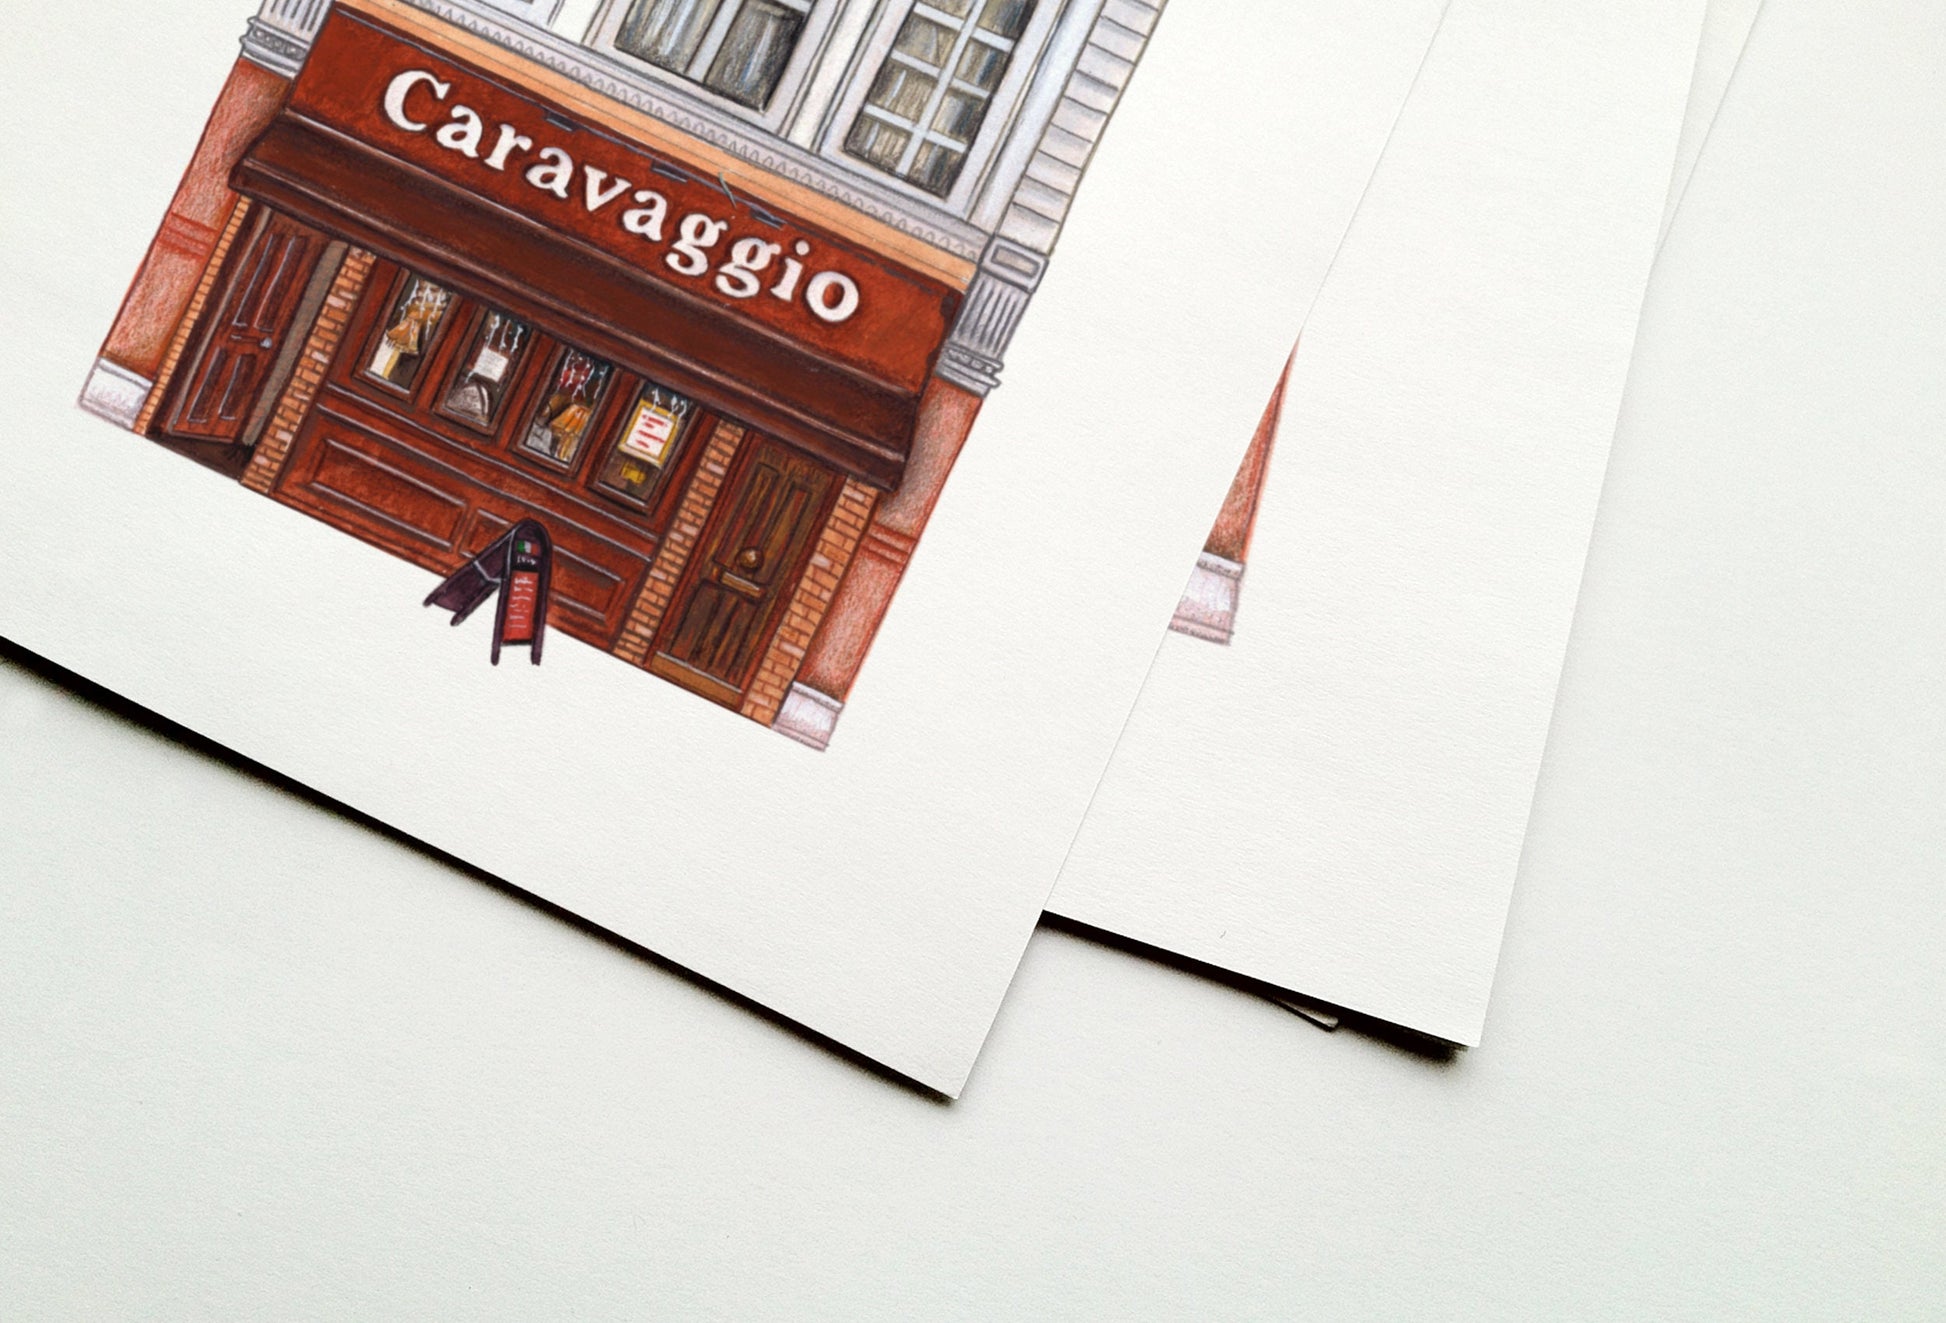 Caravaggio Italian Restaurant Art Print, Camberwell South London